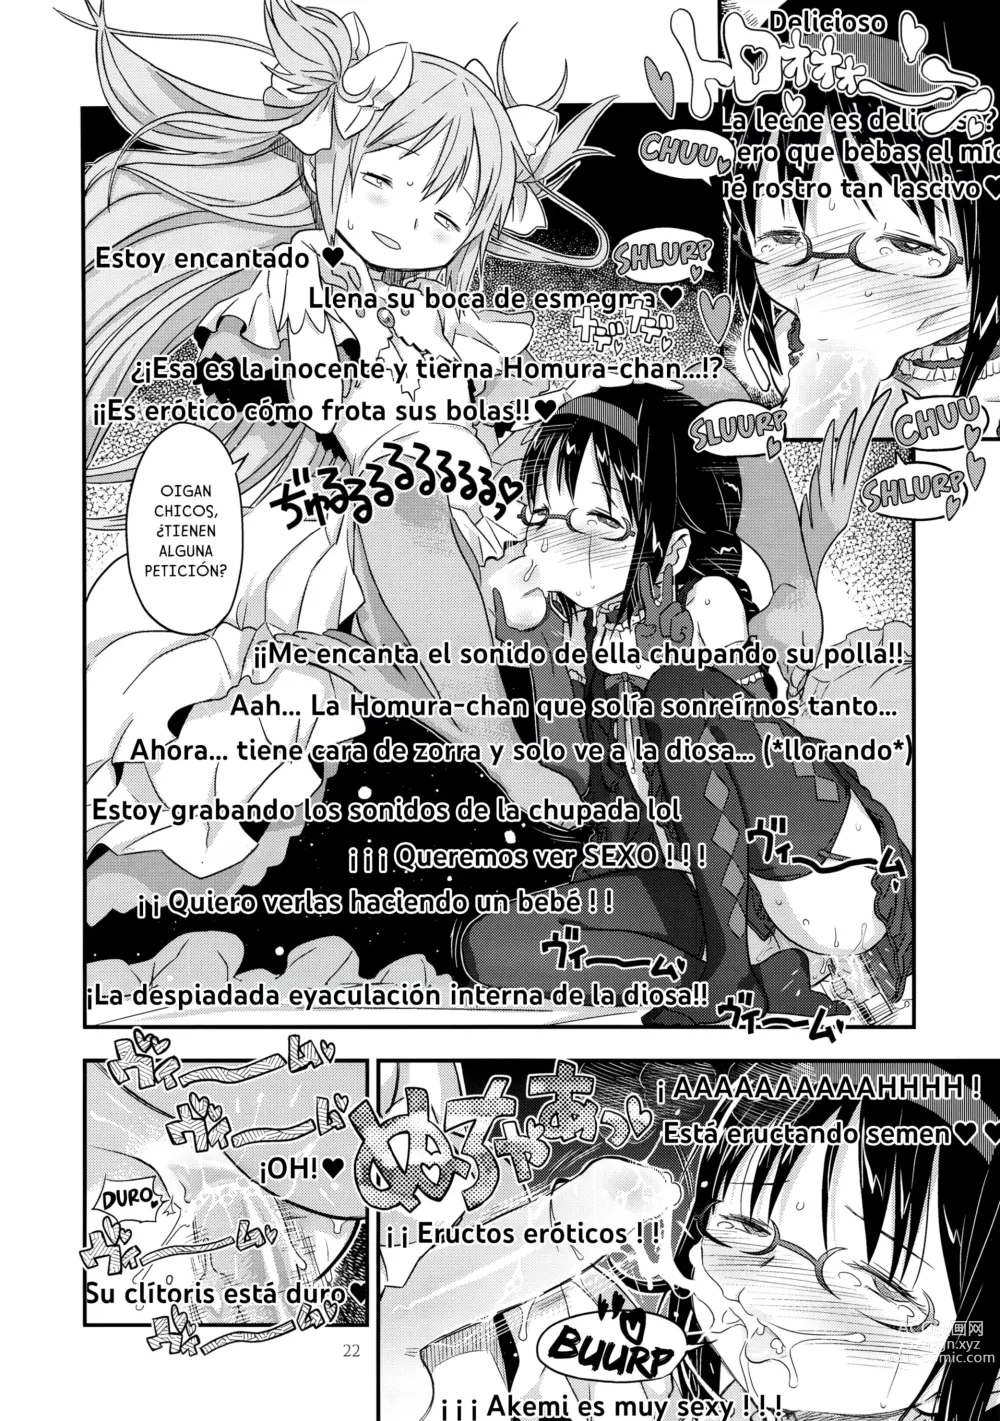 Page 21 of doujinshi GIRLIE:EX02